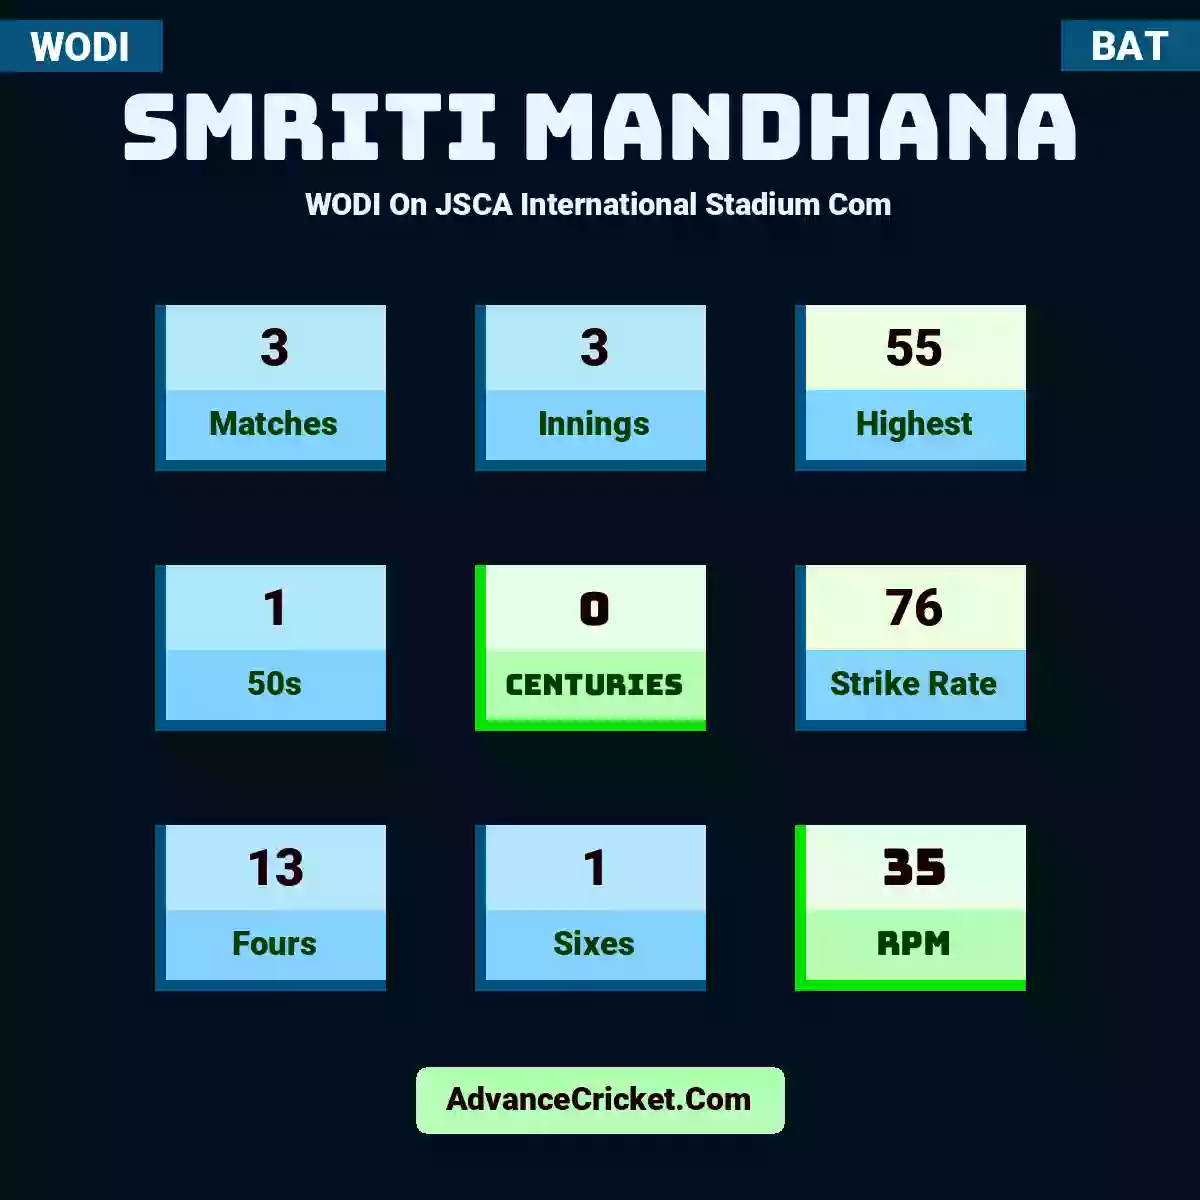 Smriti Mandhana WODI  On JSCA International Stadium Com, Smriti Mandhana played 3 matches, scored 55 runs as highest, 1 half-centuries, and 0 centuries, with a strike rate of 76. S.Mandhana hit 13 fours and 1 sixes, with an RPM of 35.